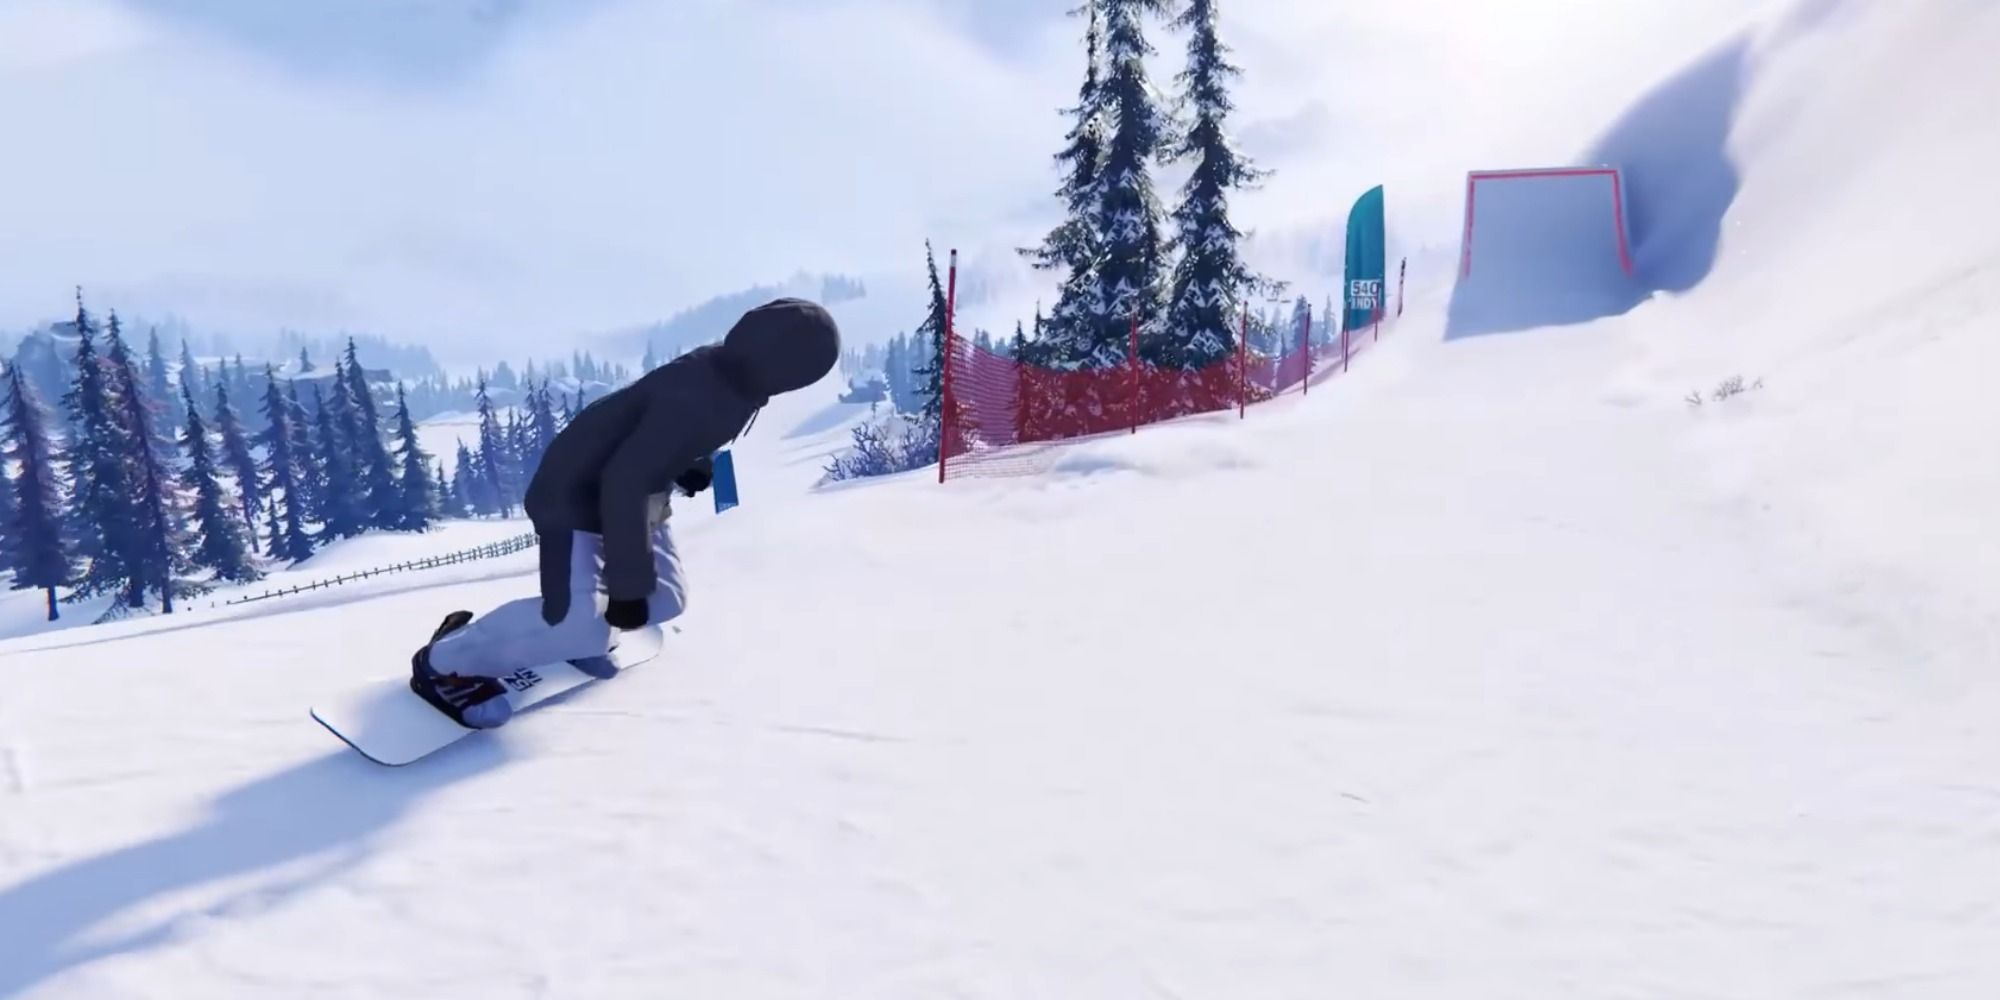 a snowboarder carving in a terrain park near jump in shredders